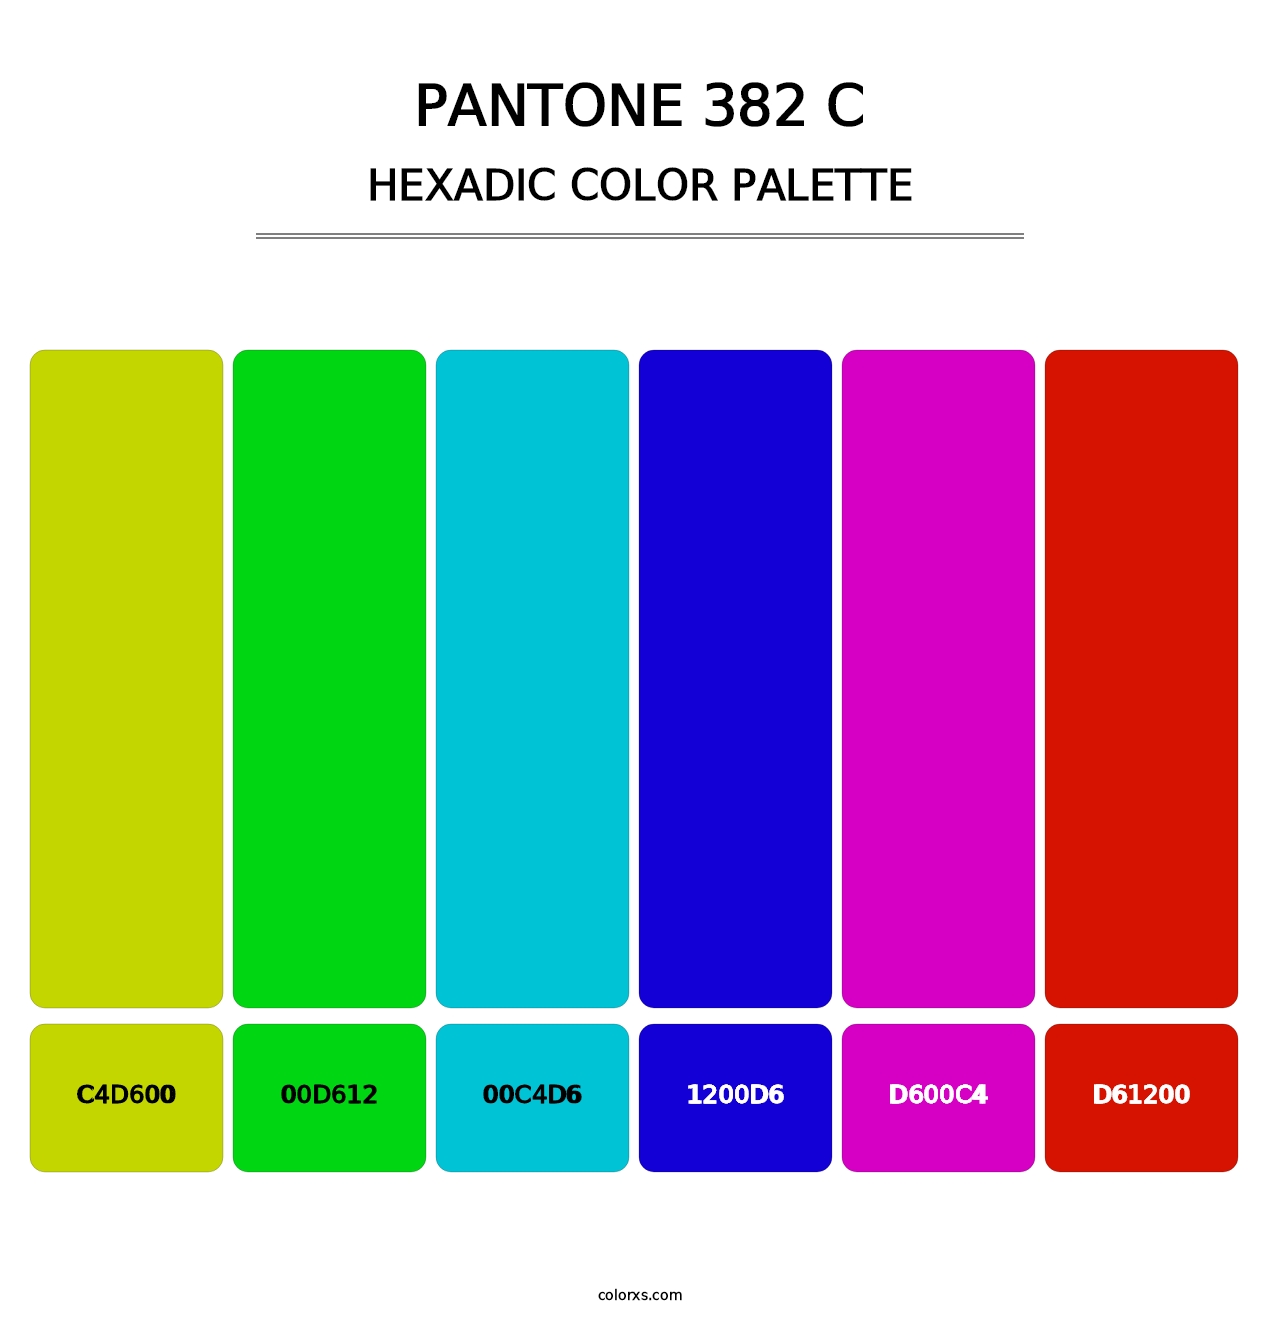 PANTONE 382 C - Hexadic Color Palette